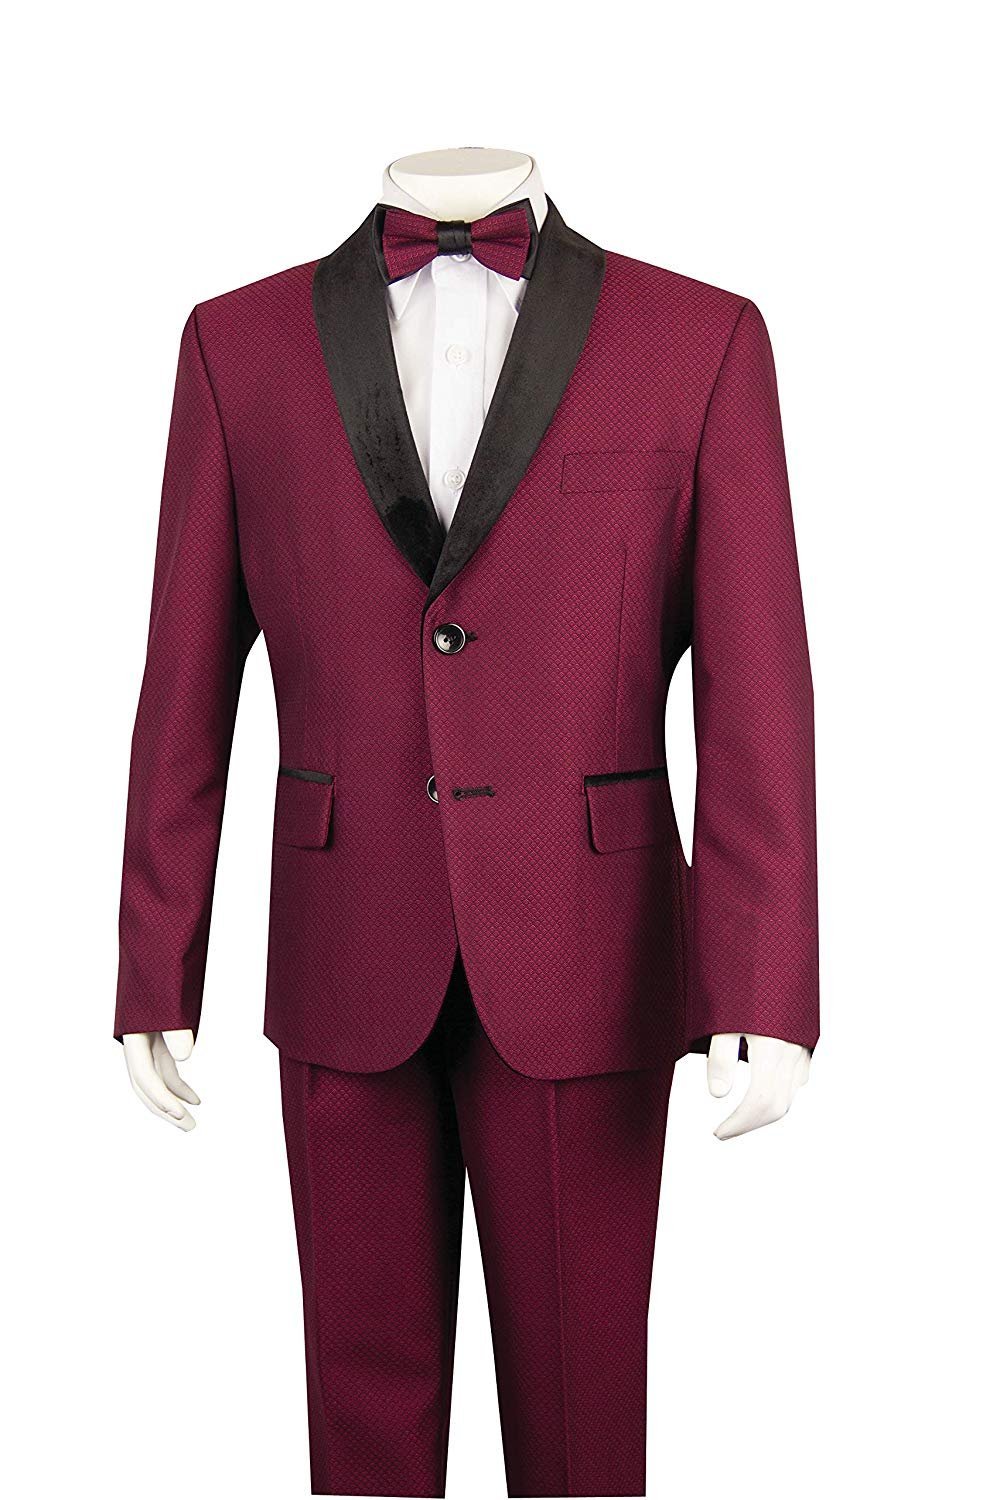 Junoior Boy’s Velvet Shawl Collar Textured Weave 4-Piece Tuxedo Suit Set - CLEARANCE - FINAL SALE